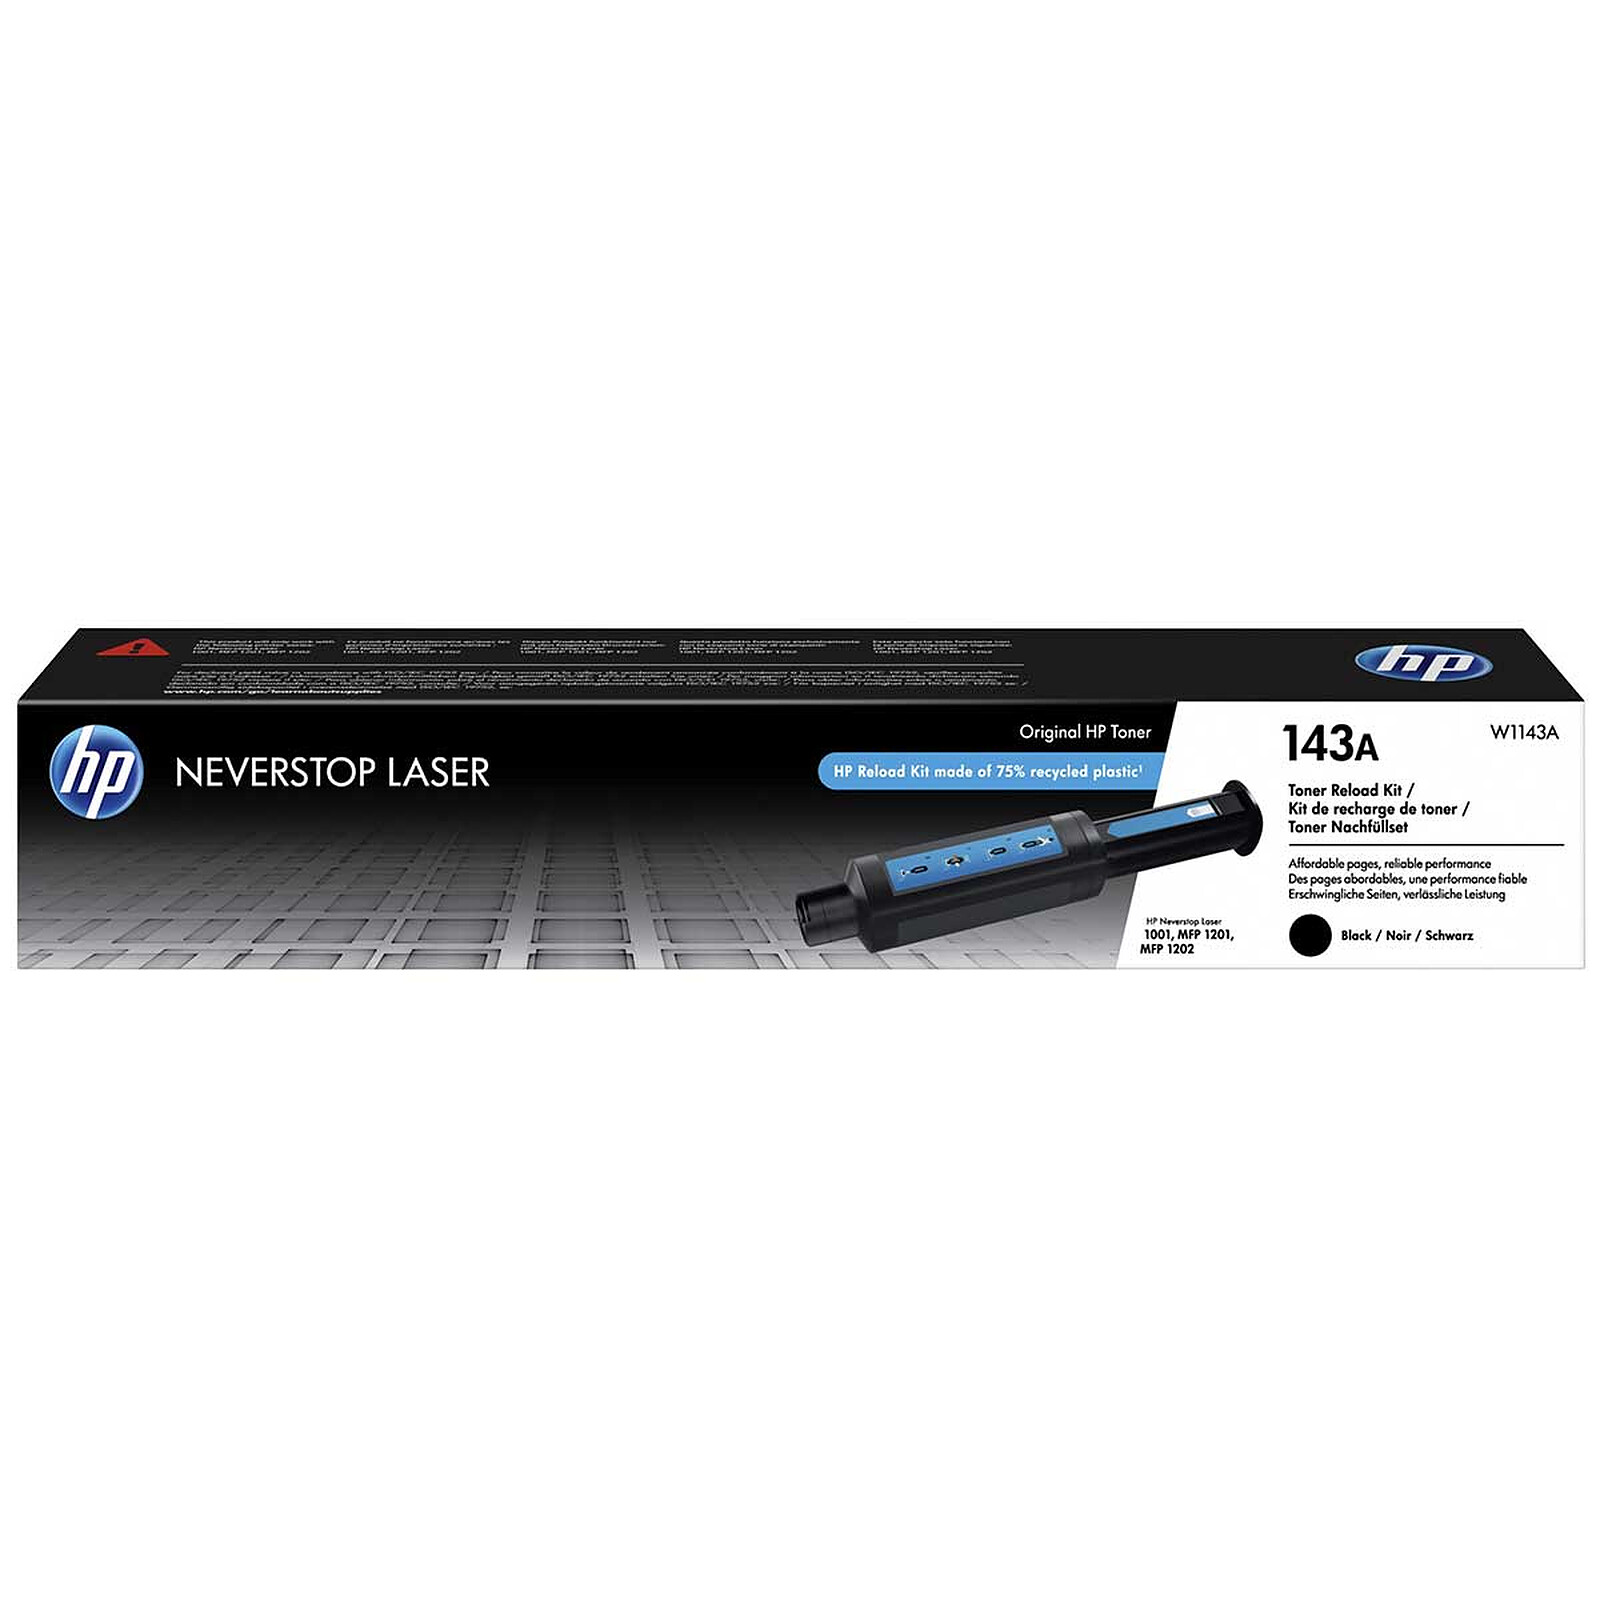 HP 143A Black - LDLC cartridge - Toner (W1143A) 